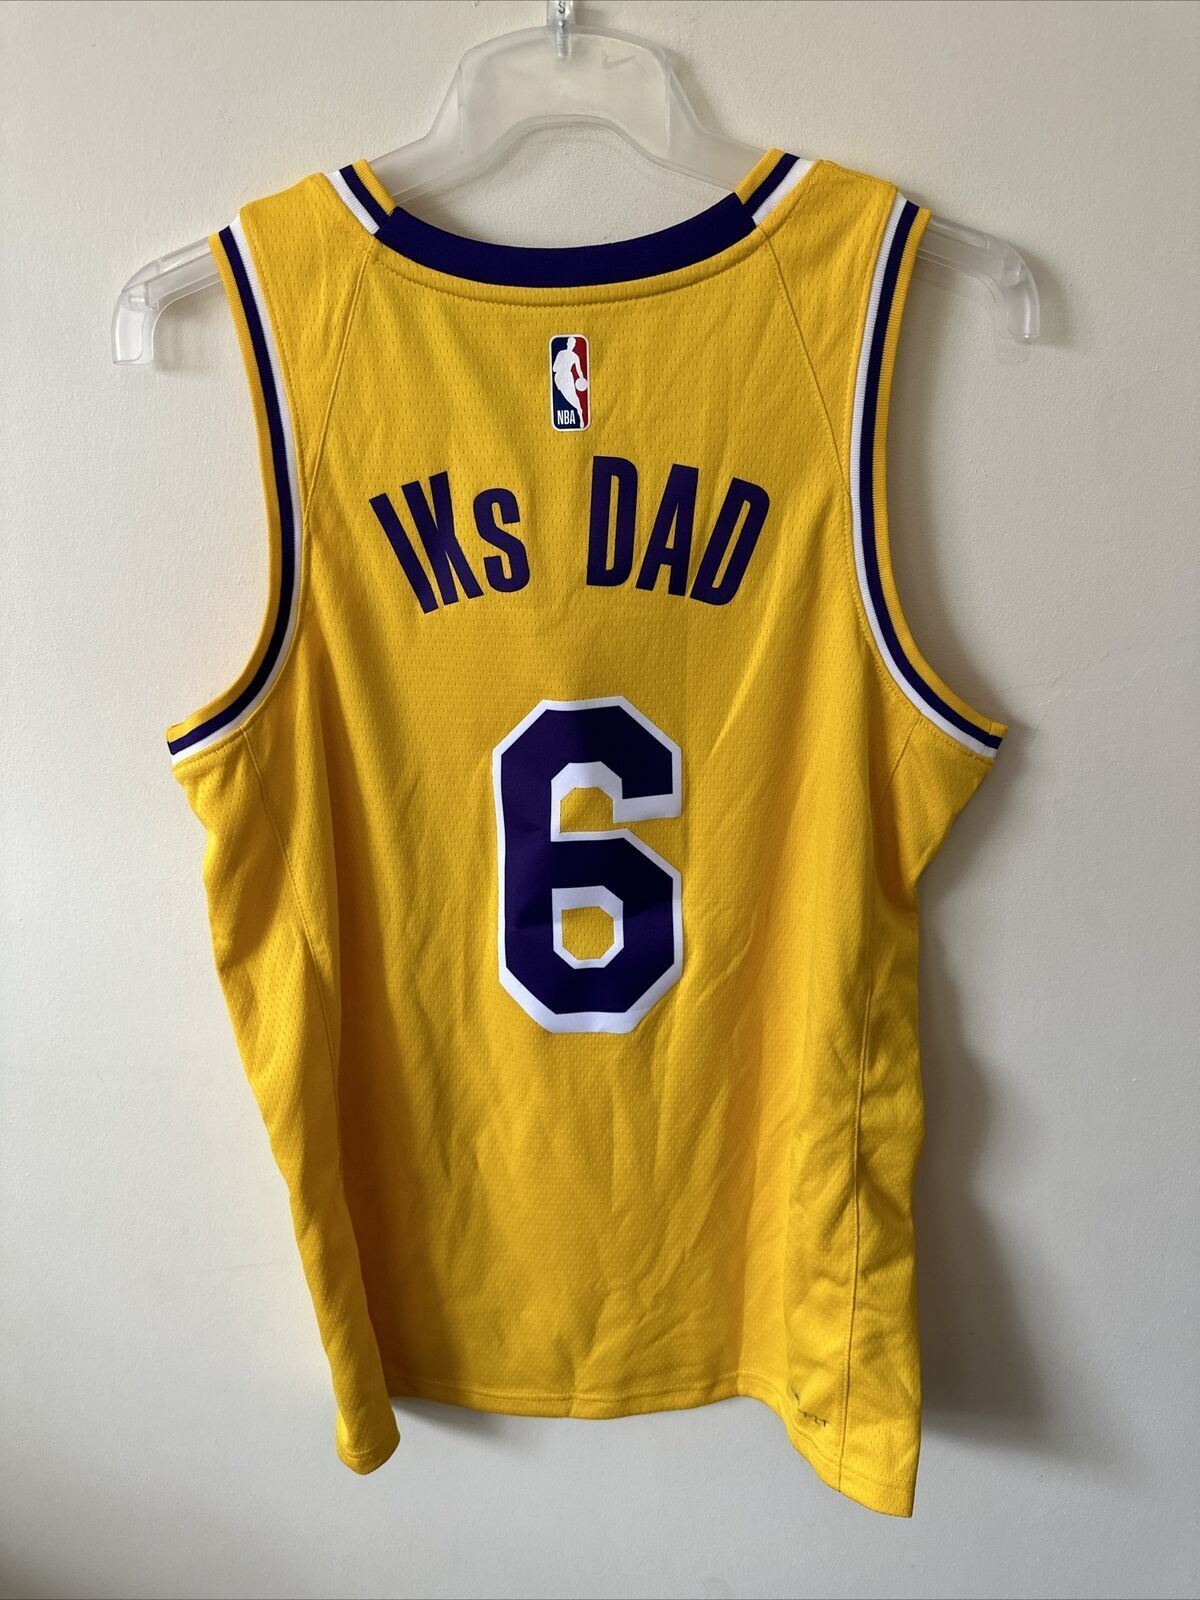 Nike NBA LA Lakers Icon Edition Jersey IKS DAD 6 Basketball Men’s Medium